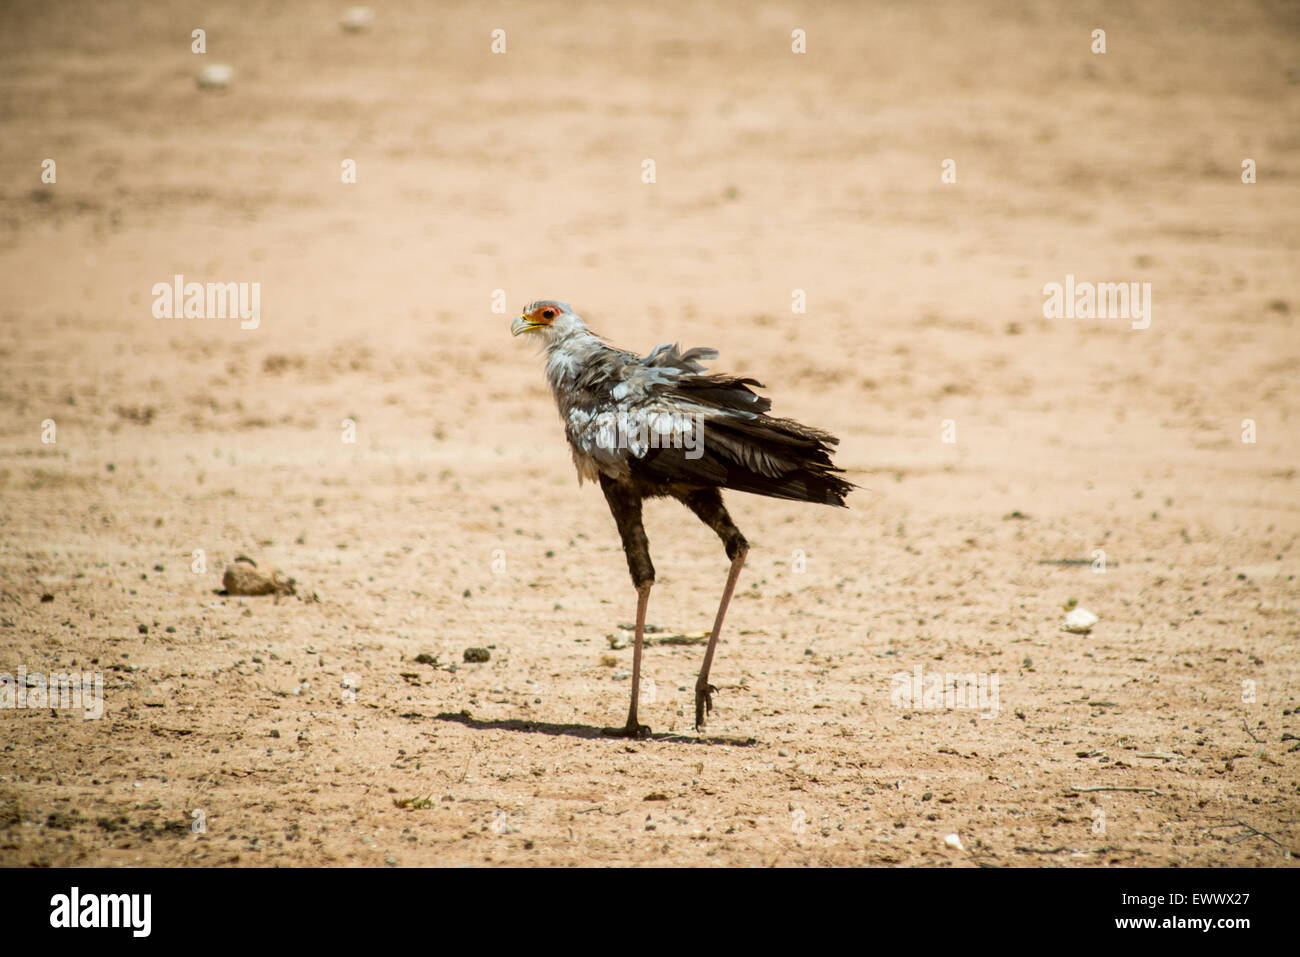 South Africa - Wild bird in Khalagadi Transfrontier Park Stock Photo